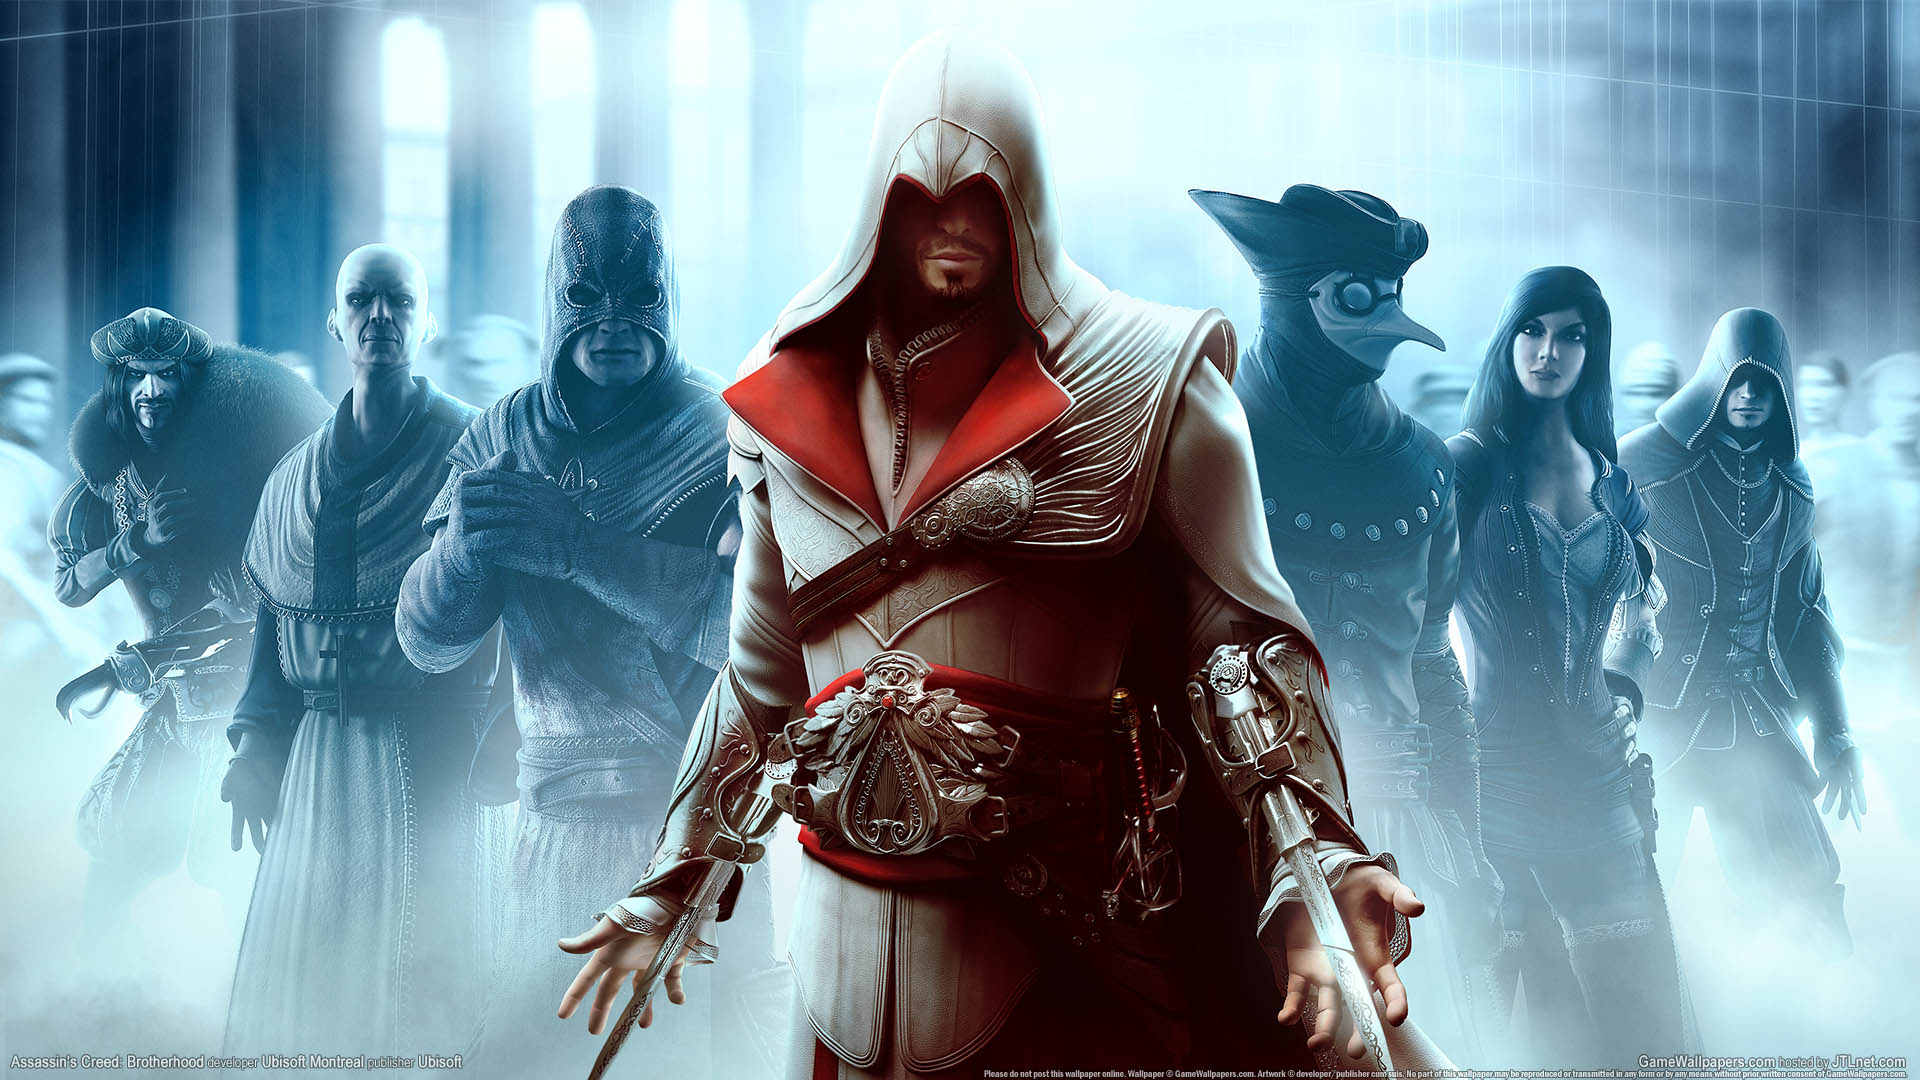 Assassin's Creed: Brotherhood achtergrond 01 1920x1080